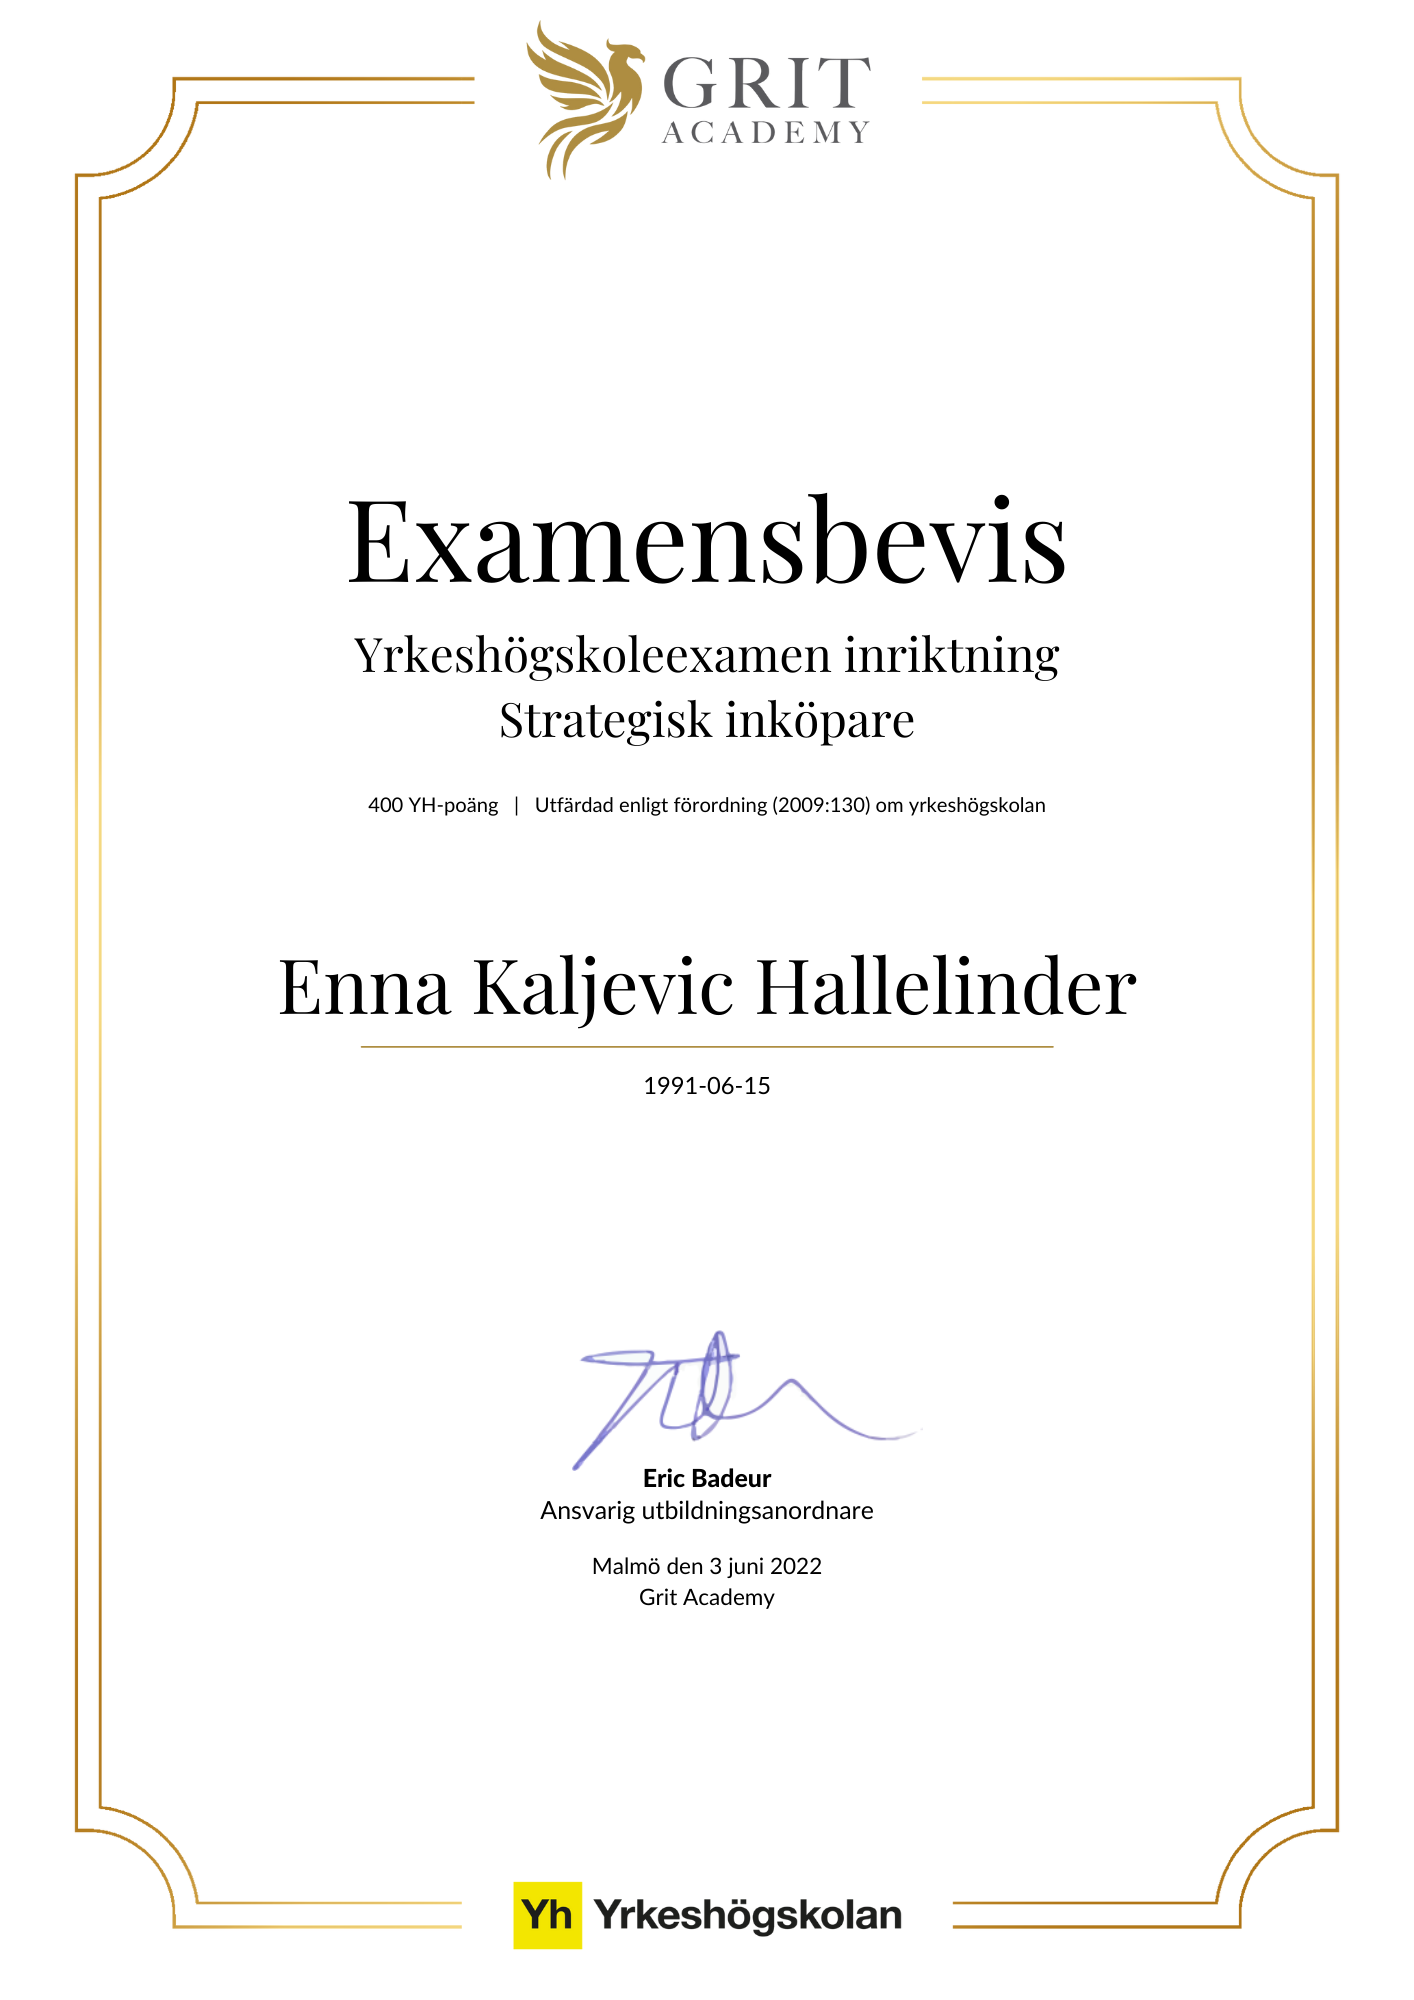 Examensbevis Enna Kaljevic Hallelinder - 1